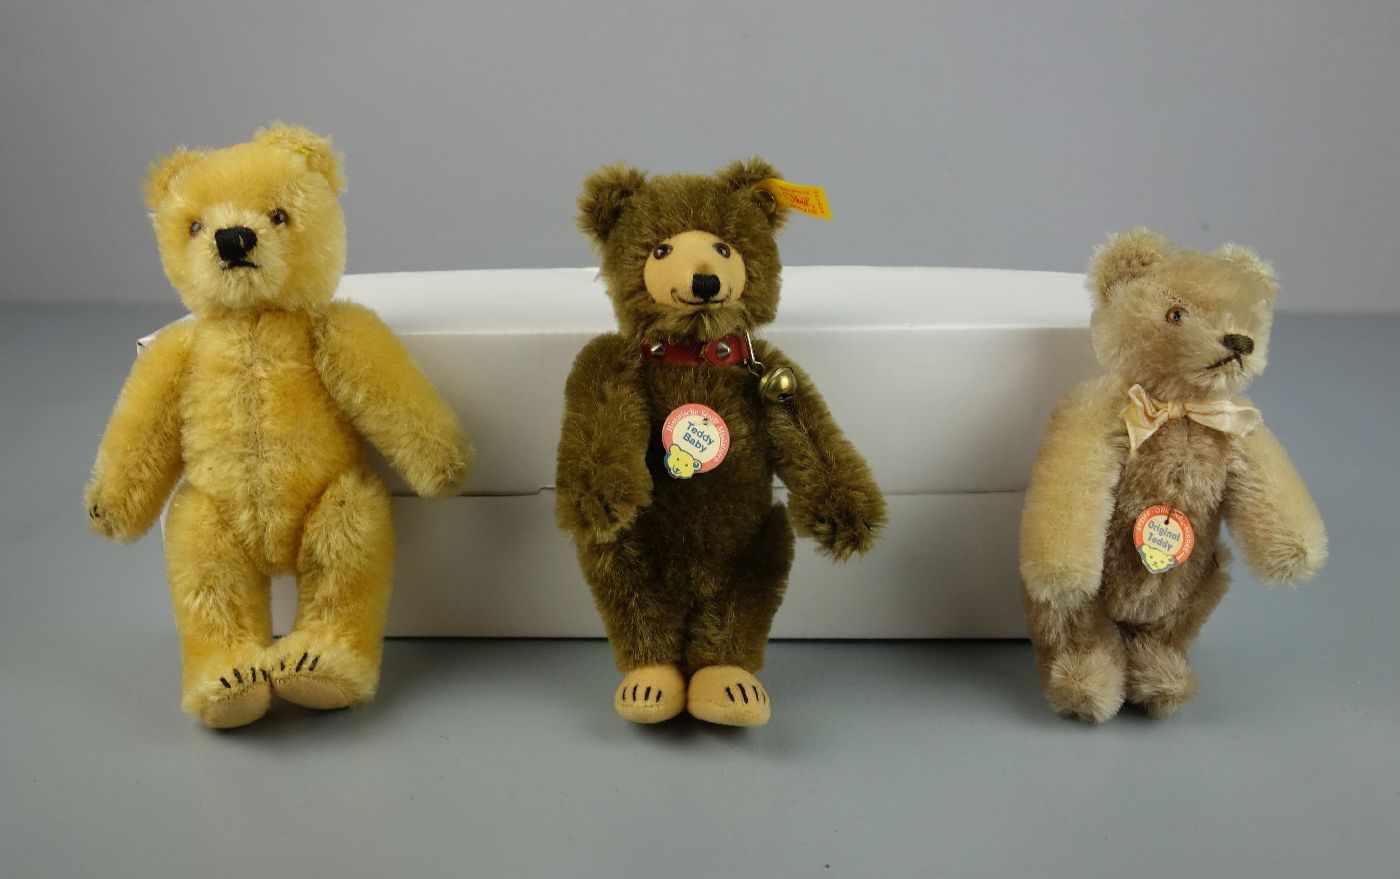 PLÜSCHTIERE / PLÜSCHFIGUREN: 3 Steiff-Teddys / Teddybären / teddy bears, 20. Jh., Manufaktur Steiff.